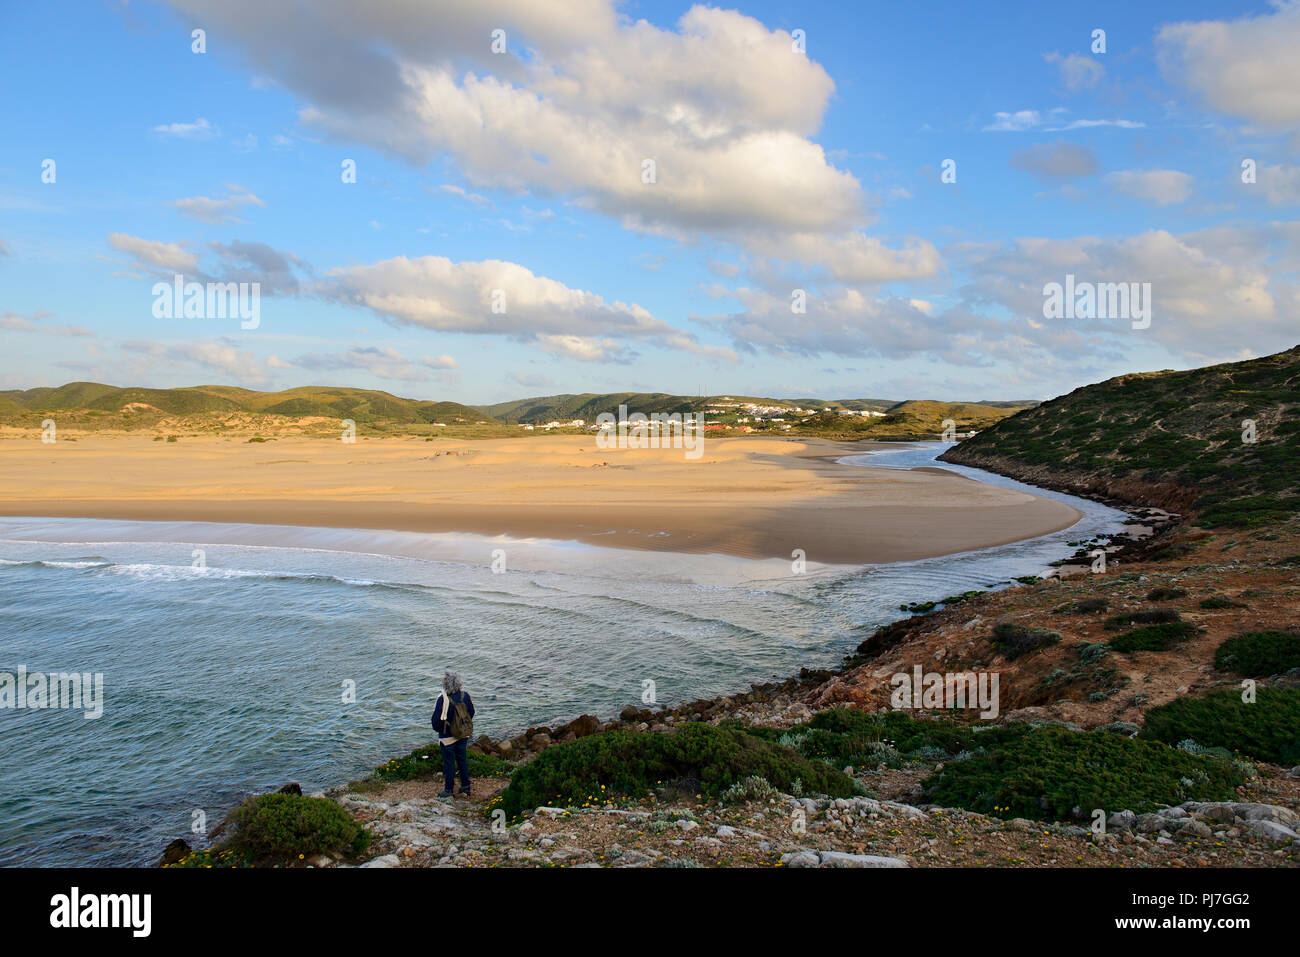 Praia da Bordeira (Bordeira beach). Parc Naturel du Sud-Ouest Alentejano et Costa Vicentina. Algarve, Portugal Banque D'Images